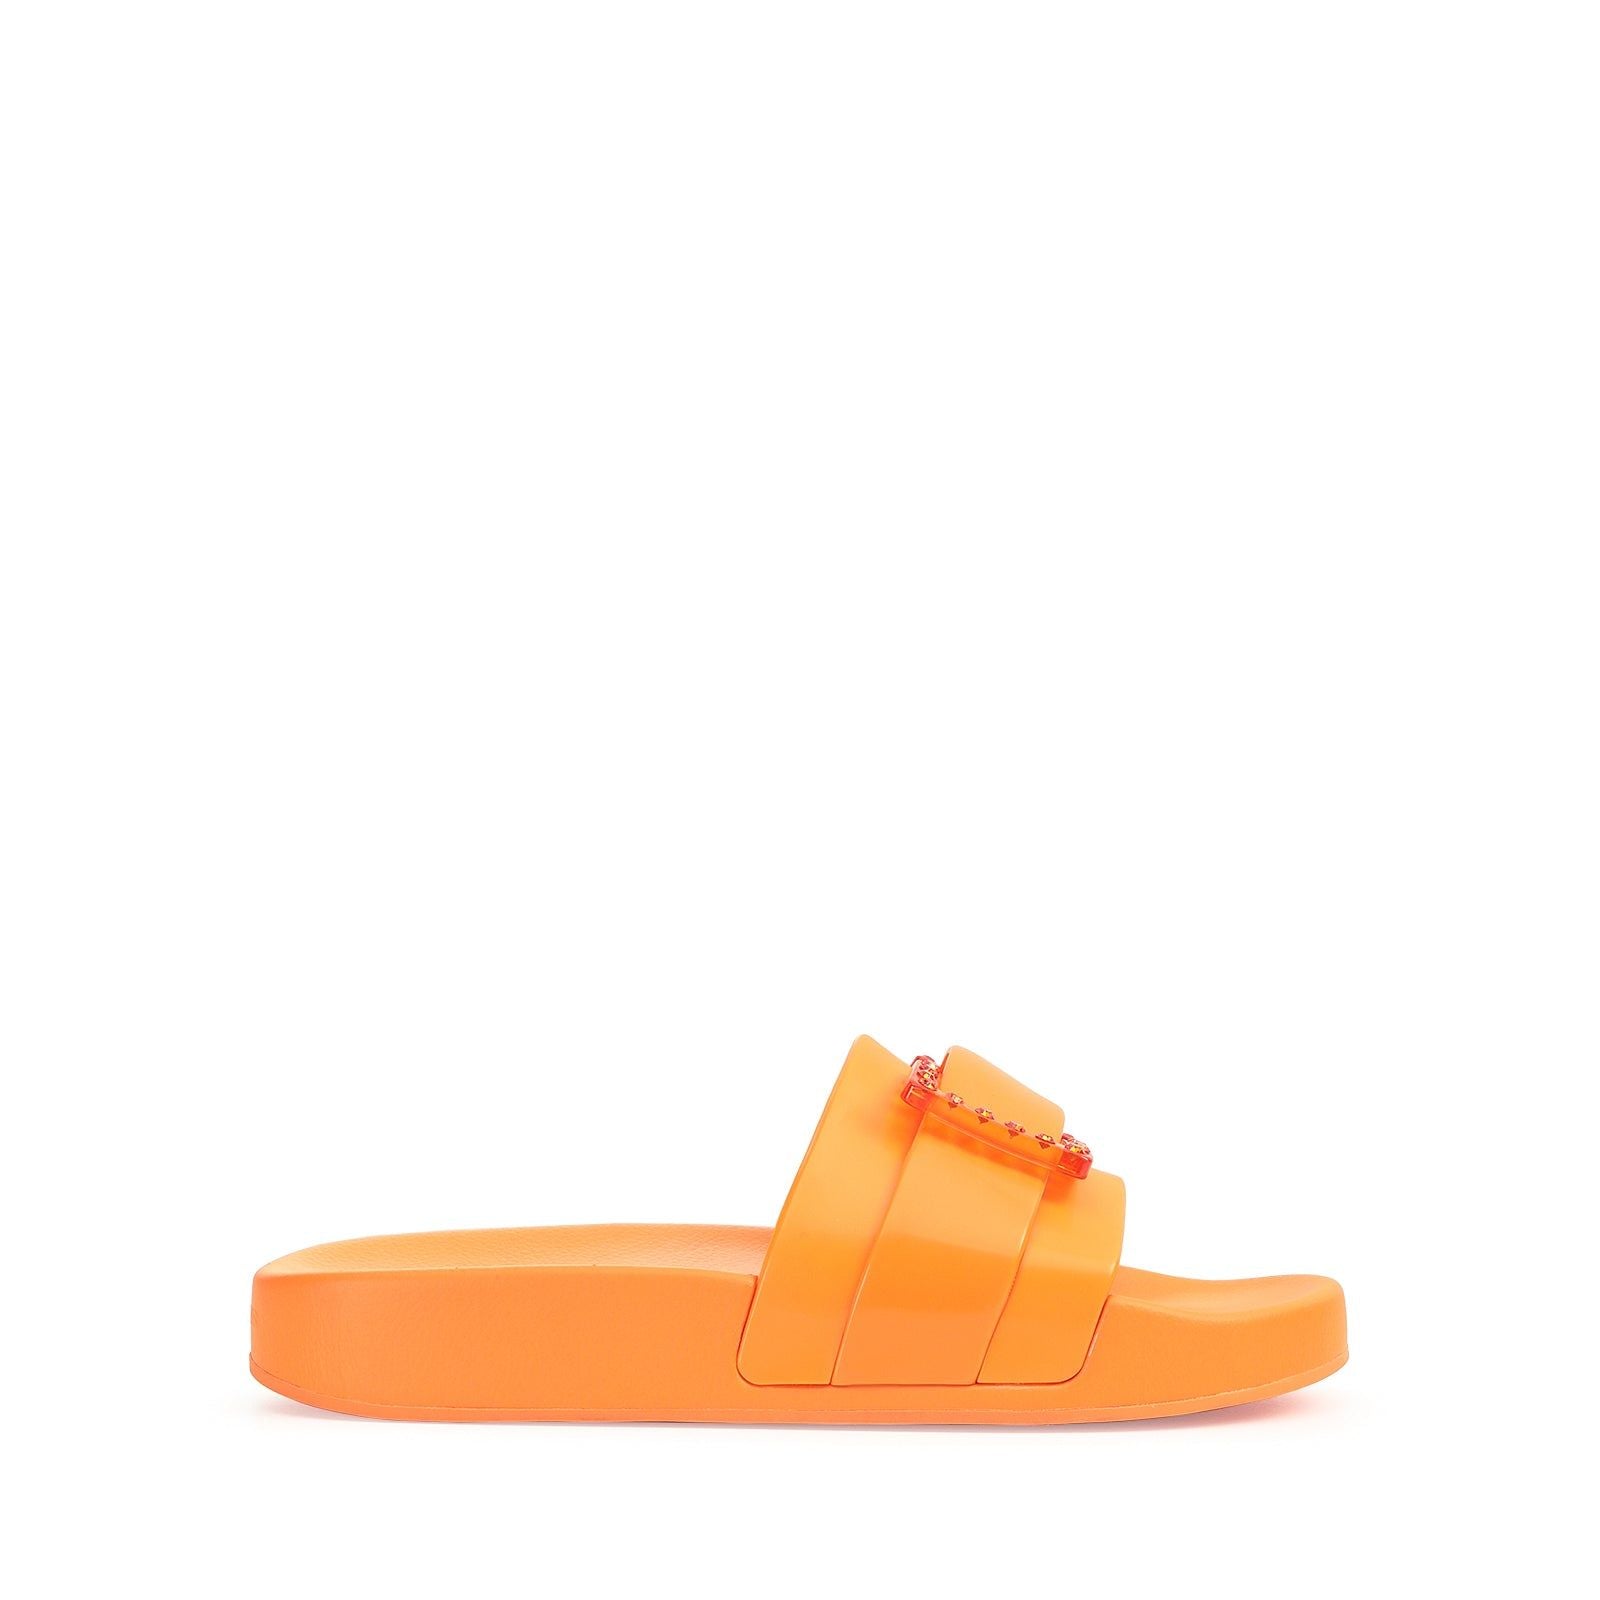 Sr Jelly flat sandals - Mandarine